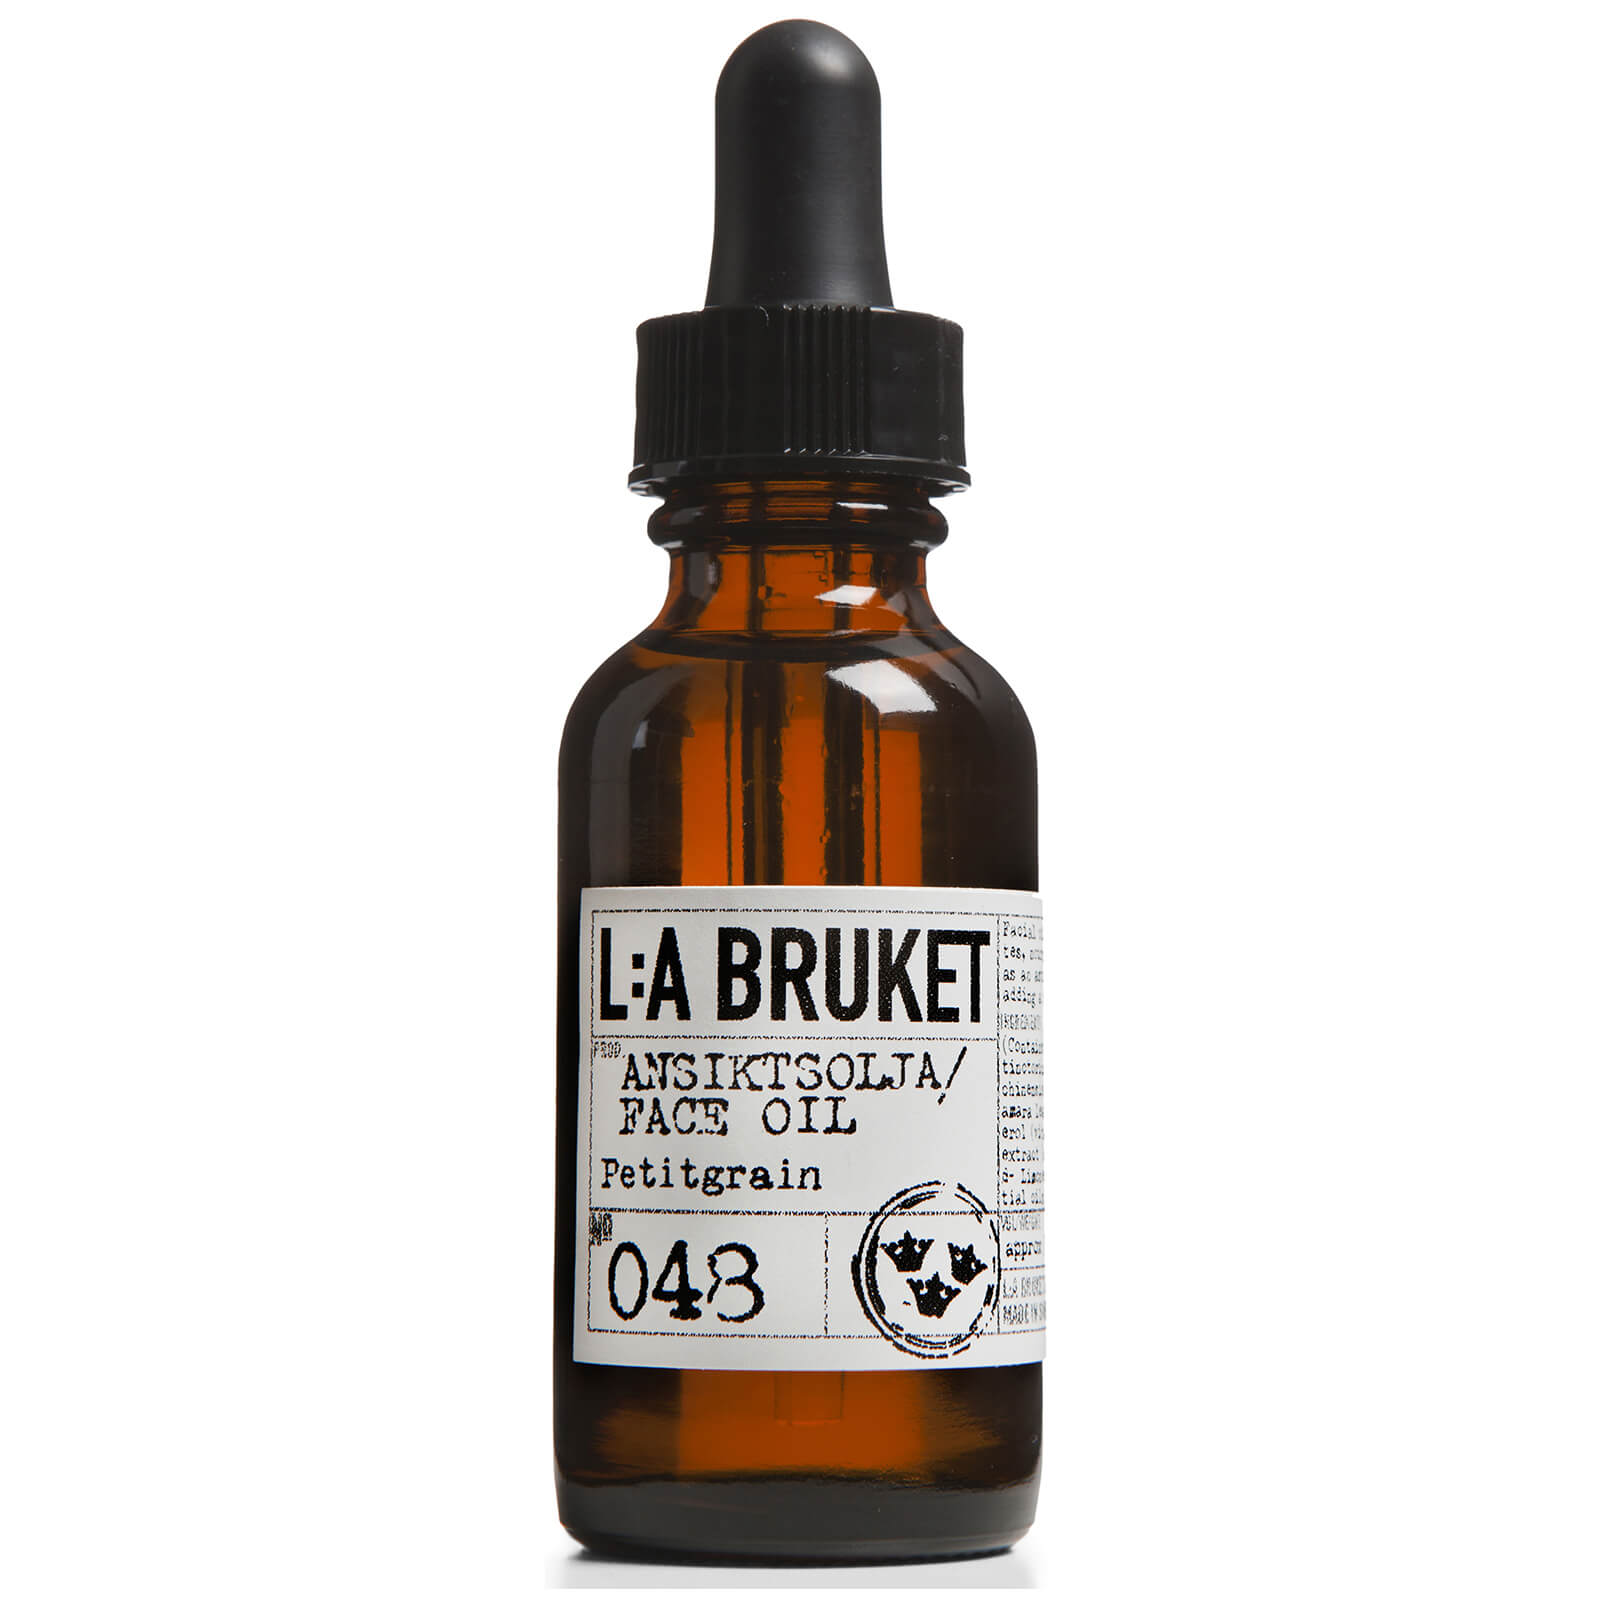 L:A BRUKET No. 048 Face Oil 30ml